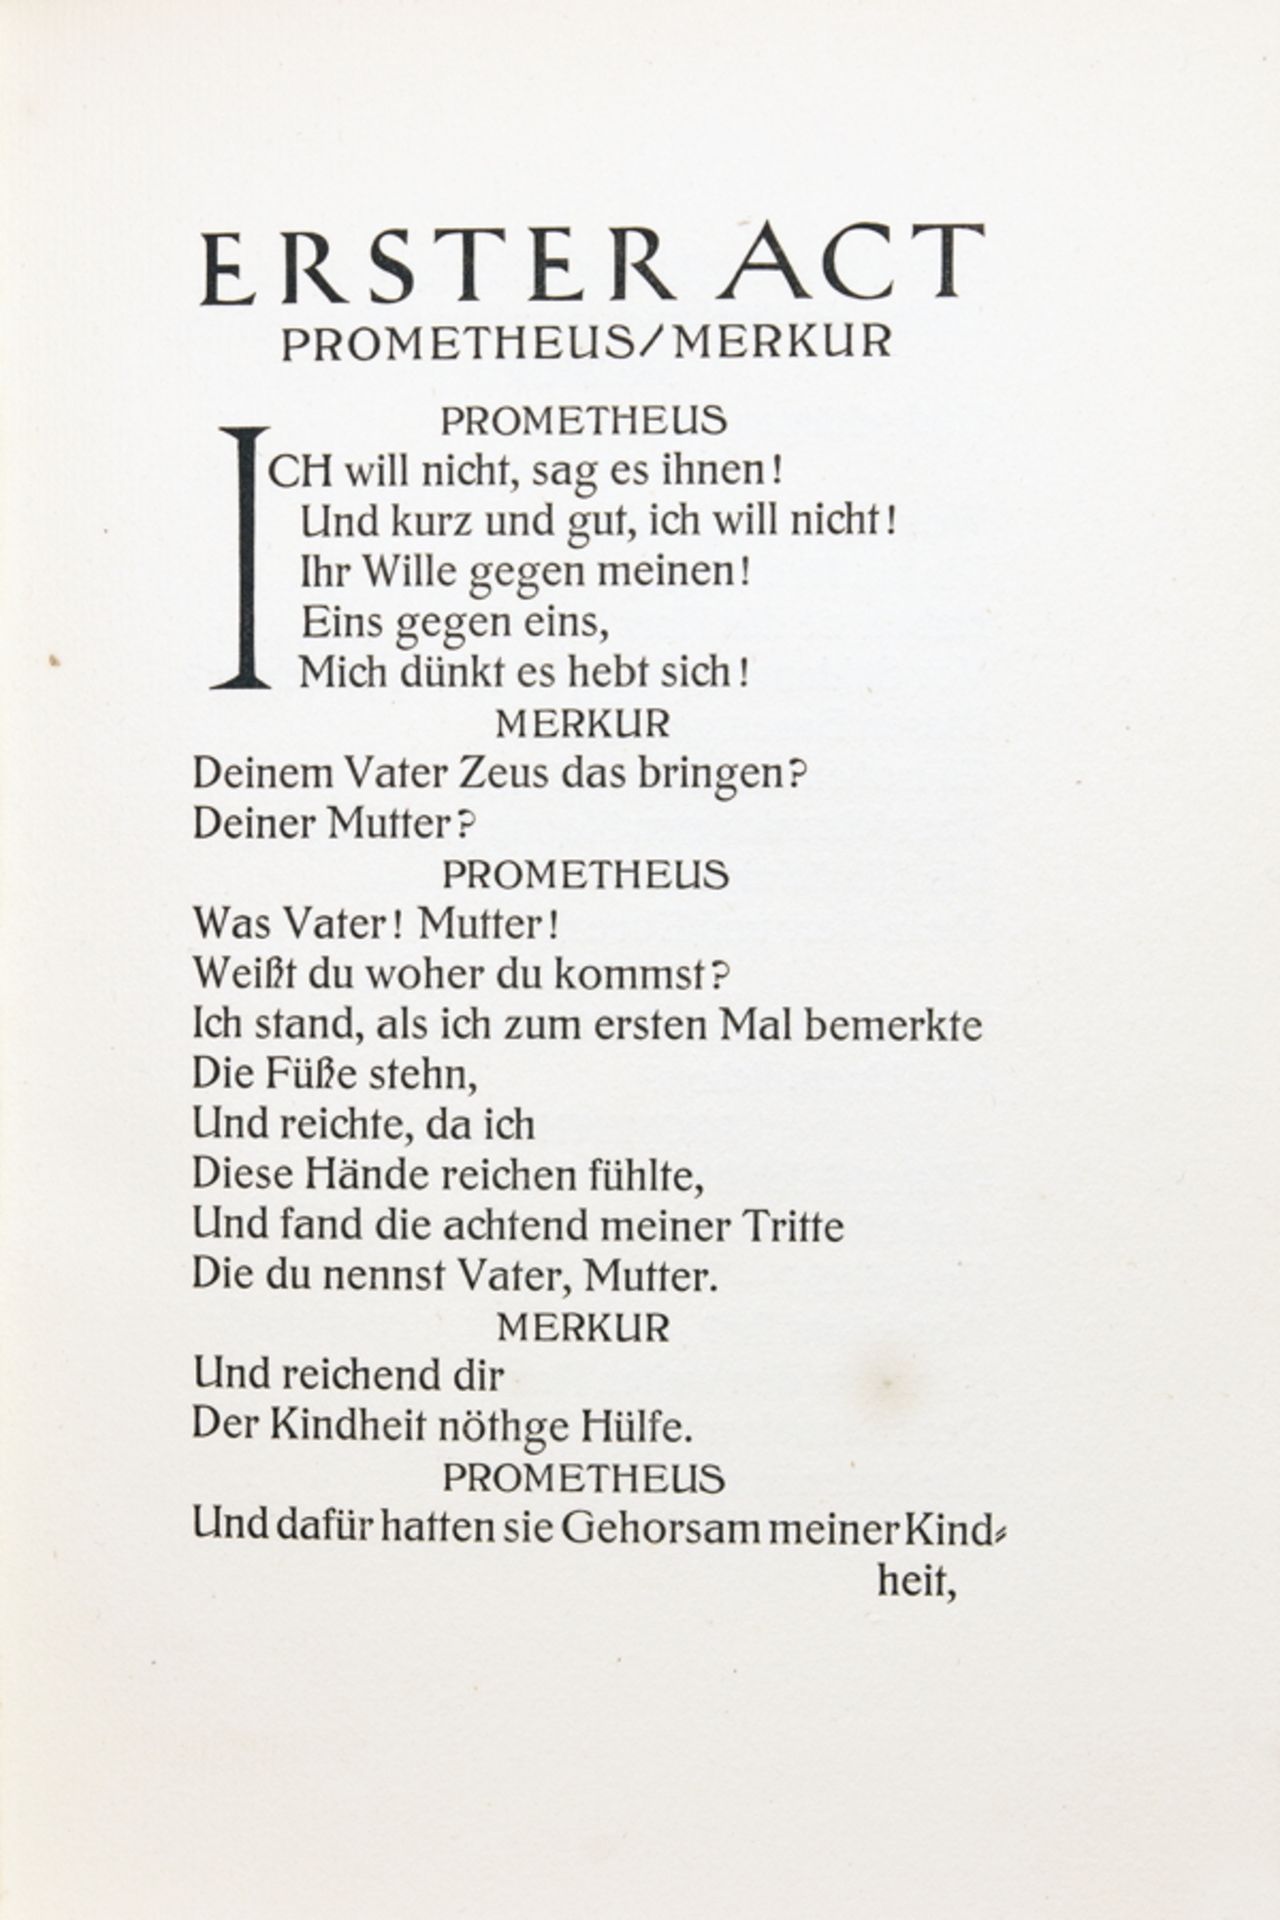 Kleukens-Presse - [Johann Wolfgang von] Goethe. Prometheus. Frankfurt am Main 1922.